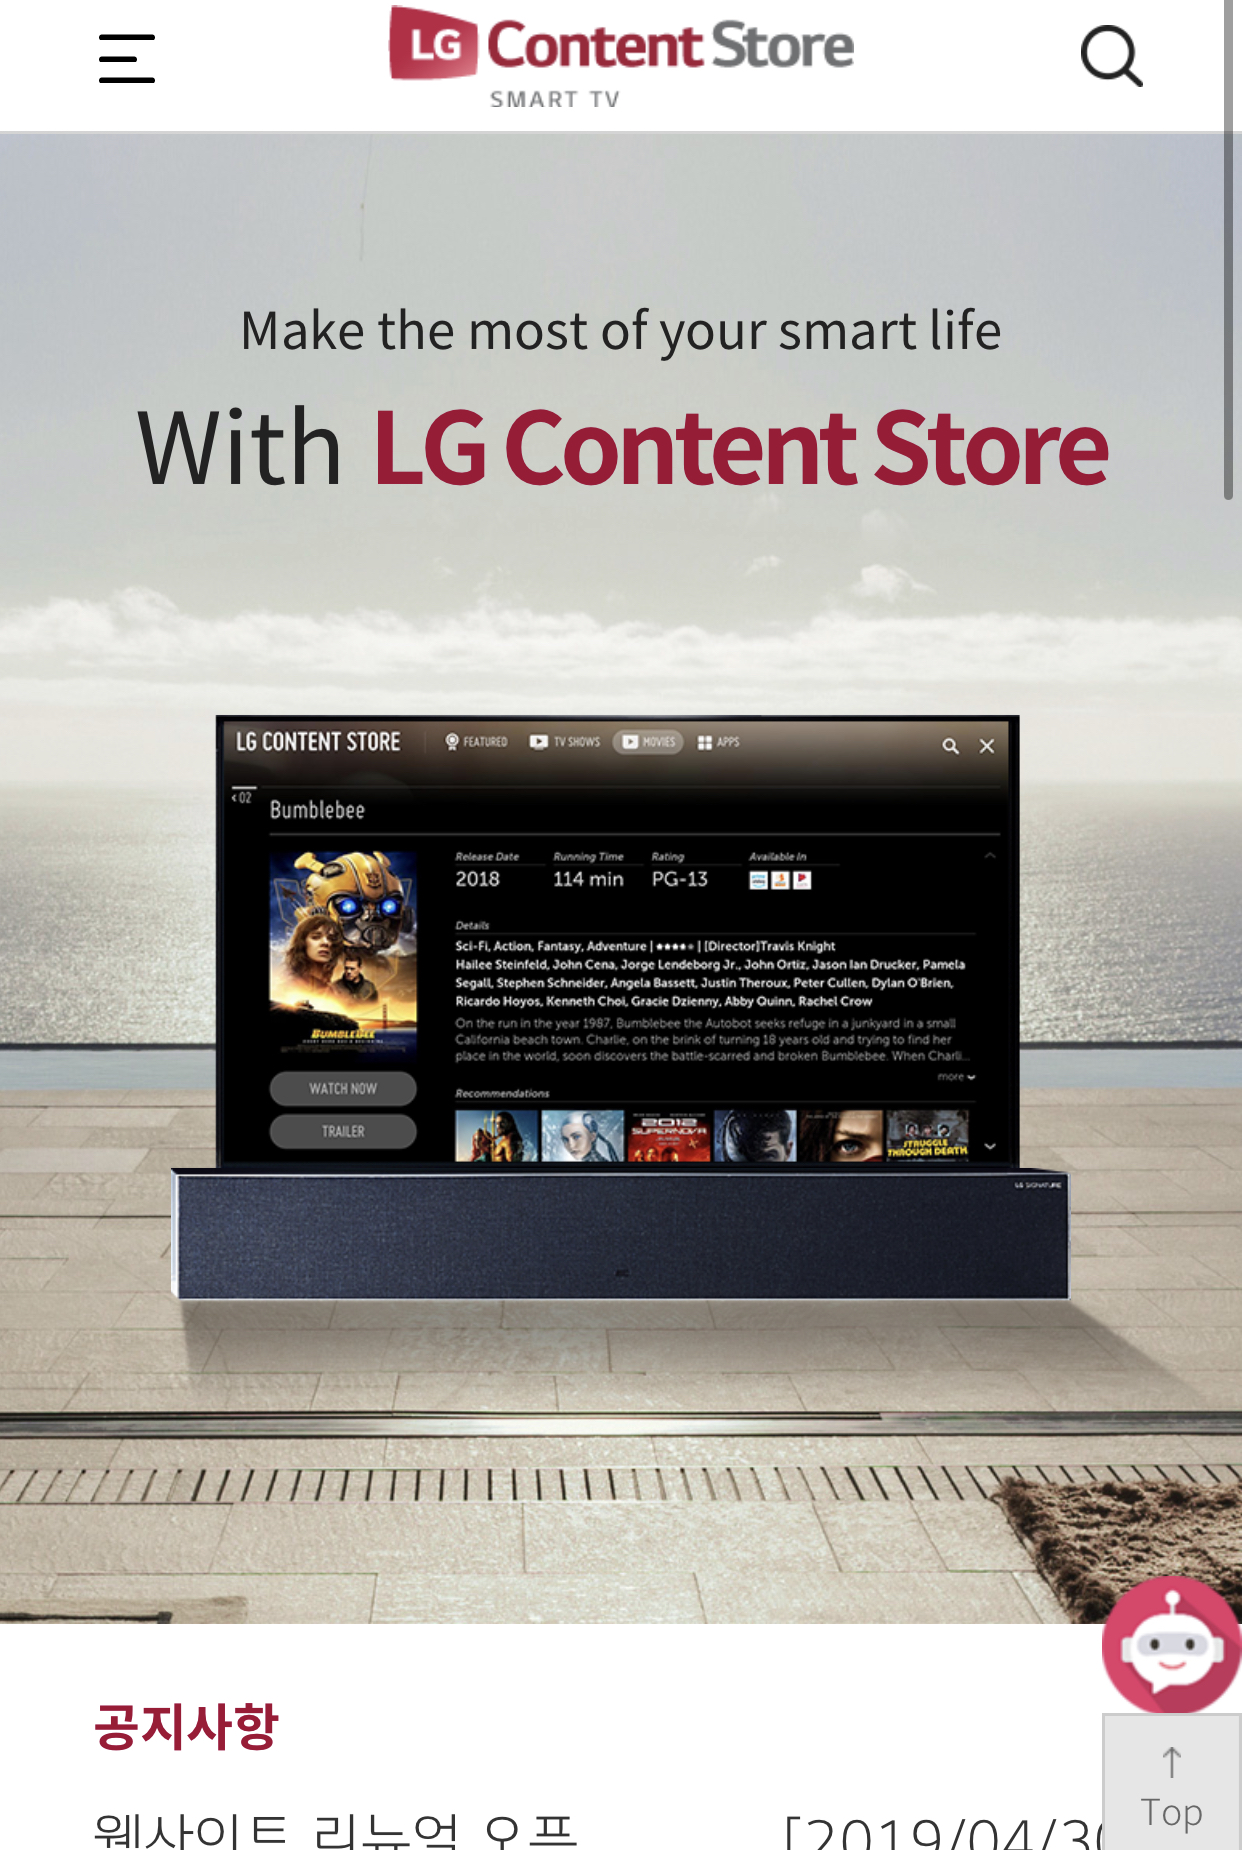 LG Content Store 모바일웹 스크릿샷